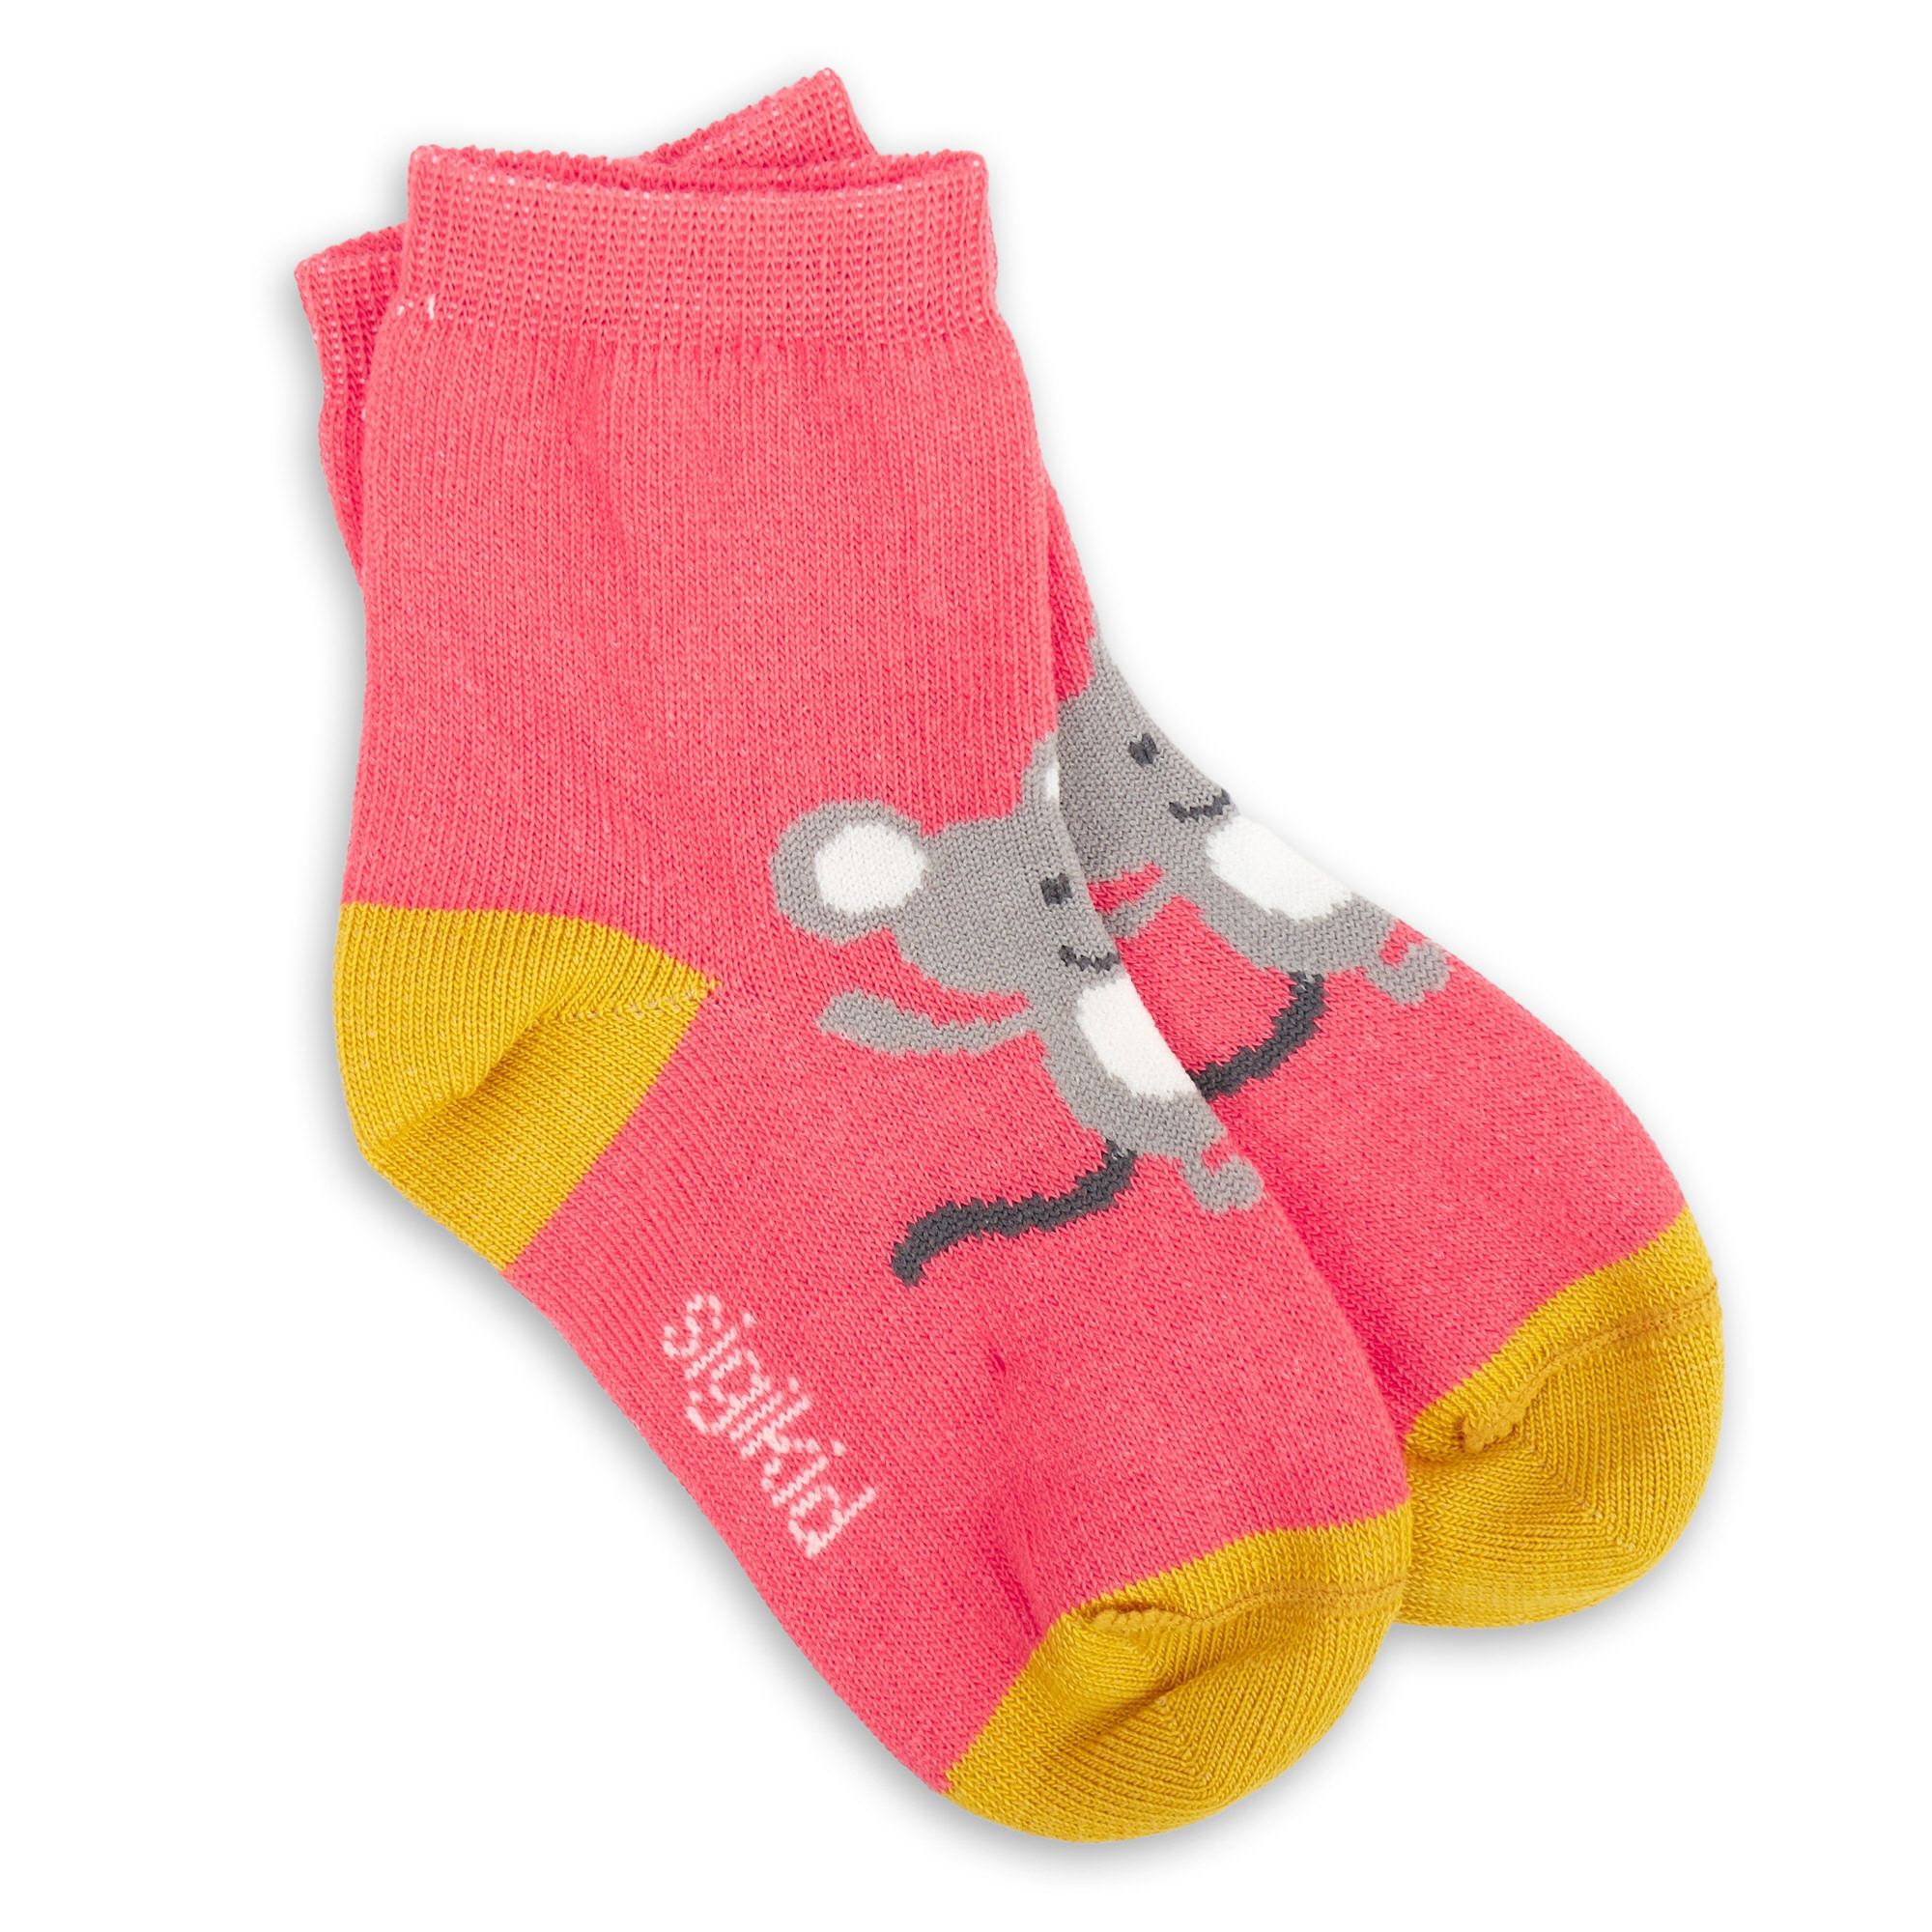 3 pair set baby socks coral pink/pastel pink